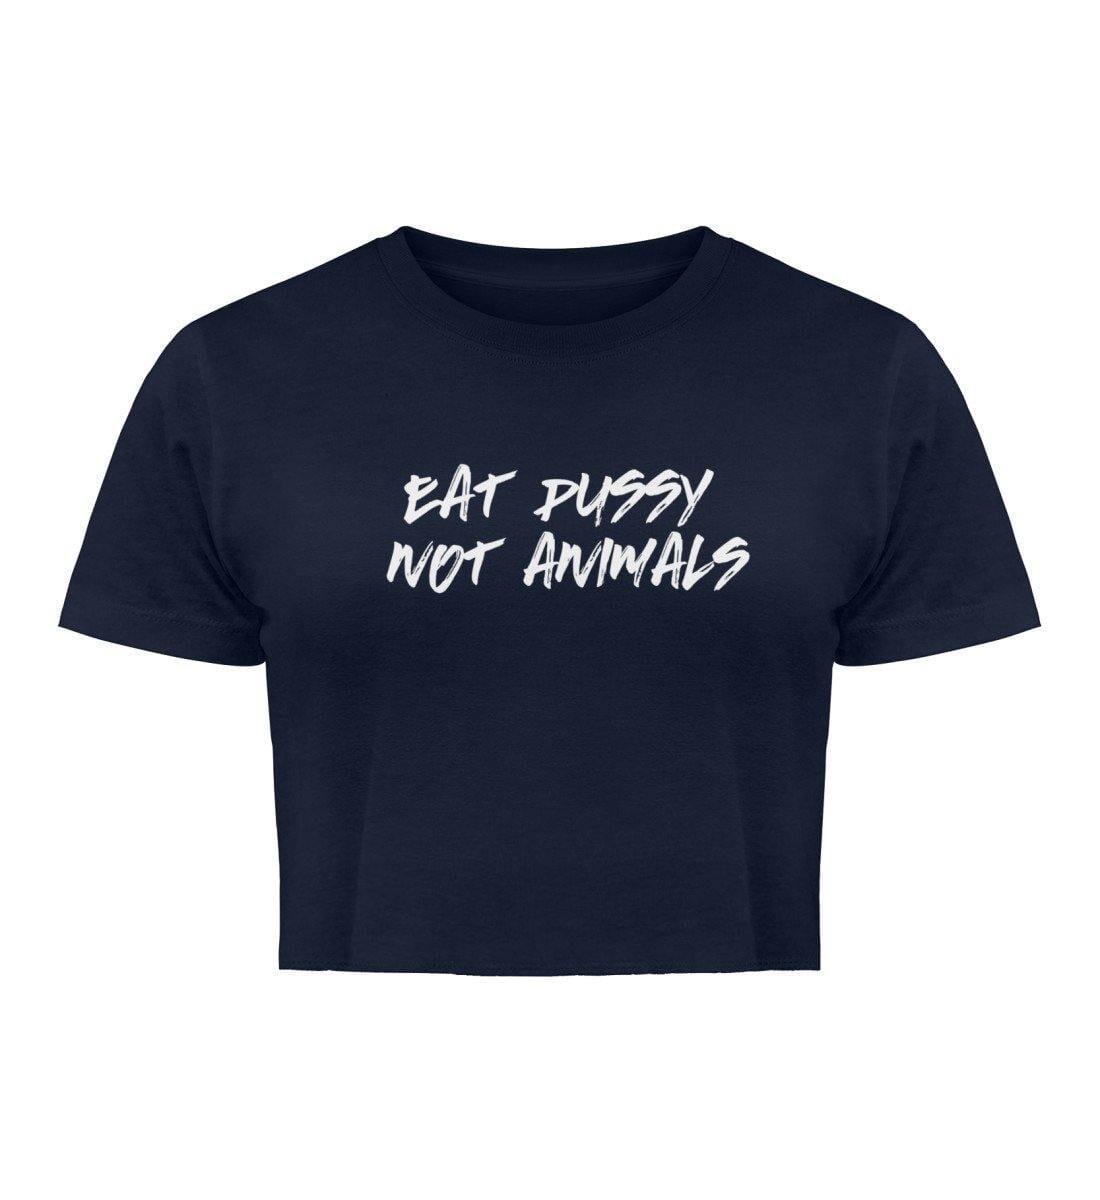 Eat pussy not animals - Damen Organic Crop Top - Team Vegan © vegan t shirt